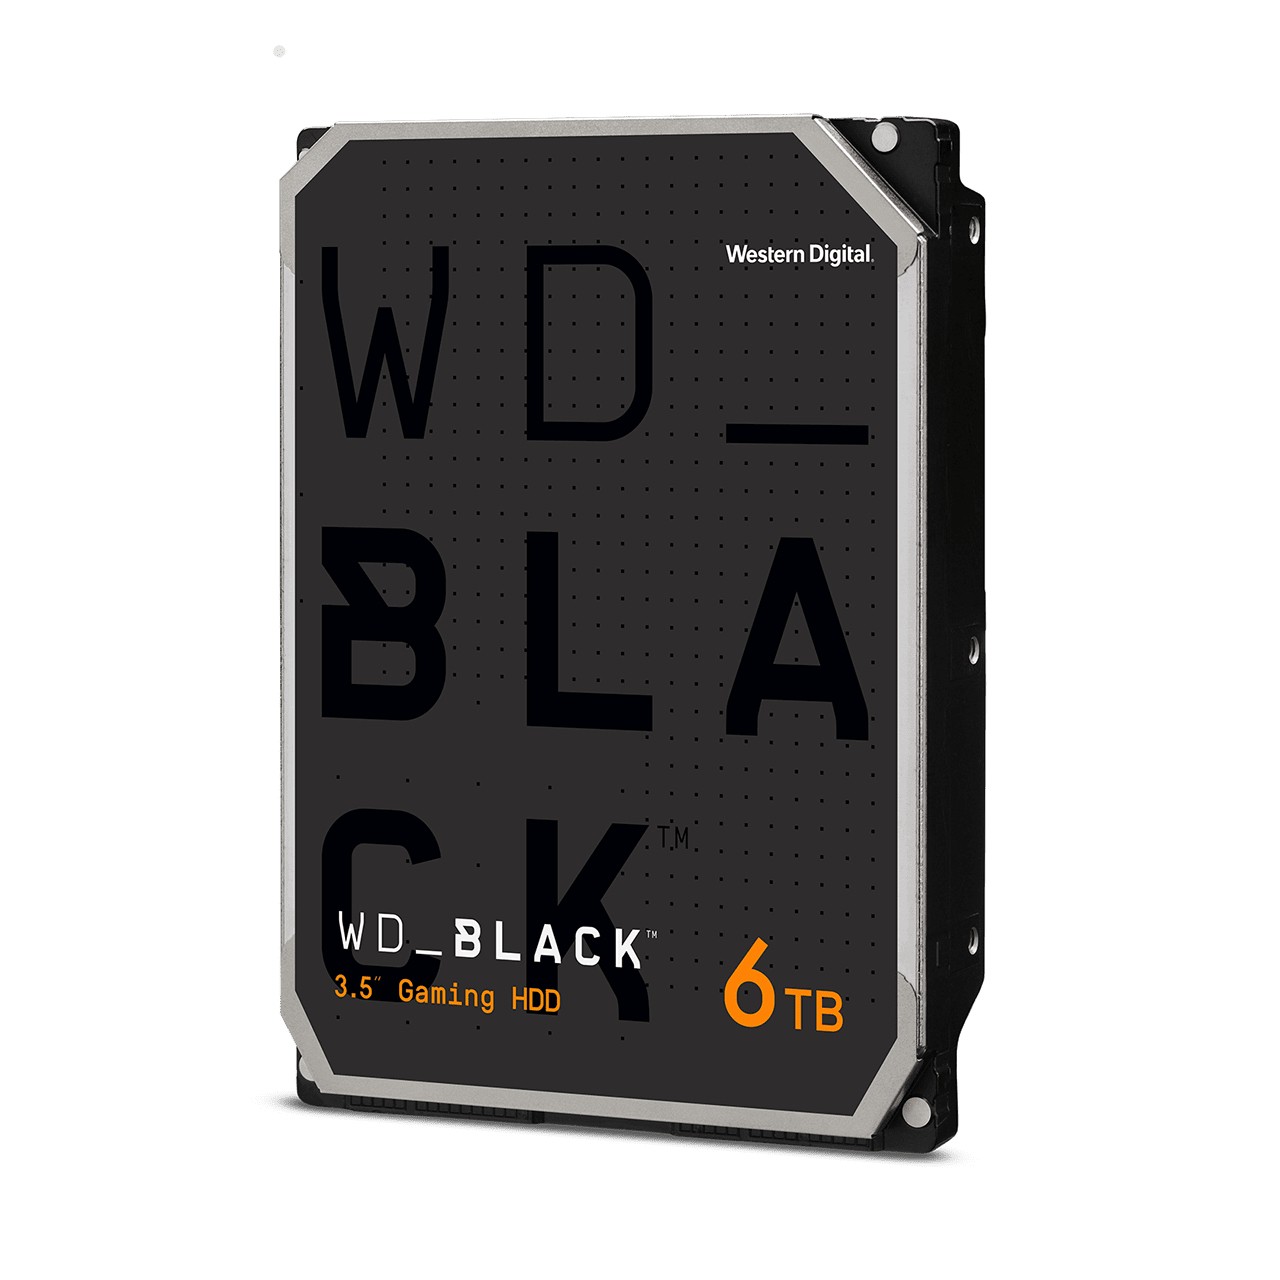 HDD Western Digital WD_BLACK 6TB Sata III 128MB